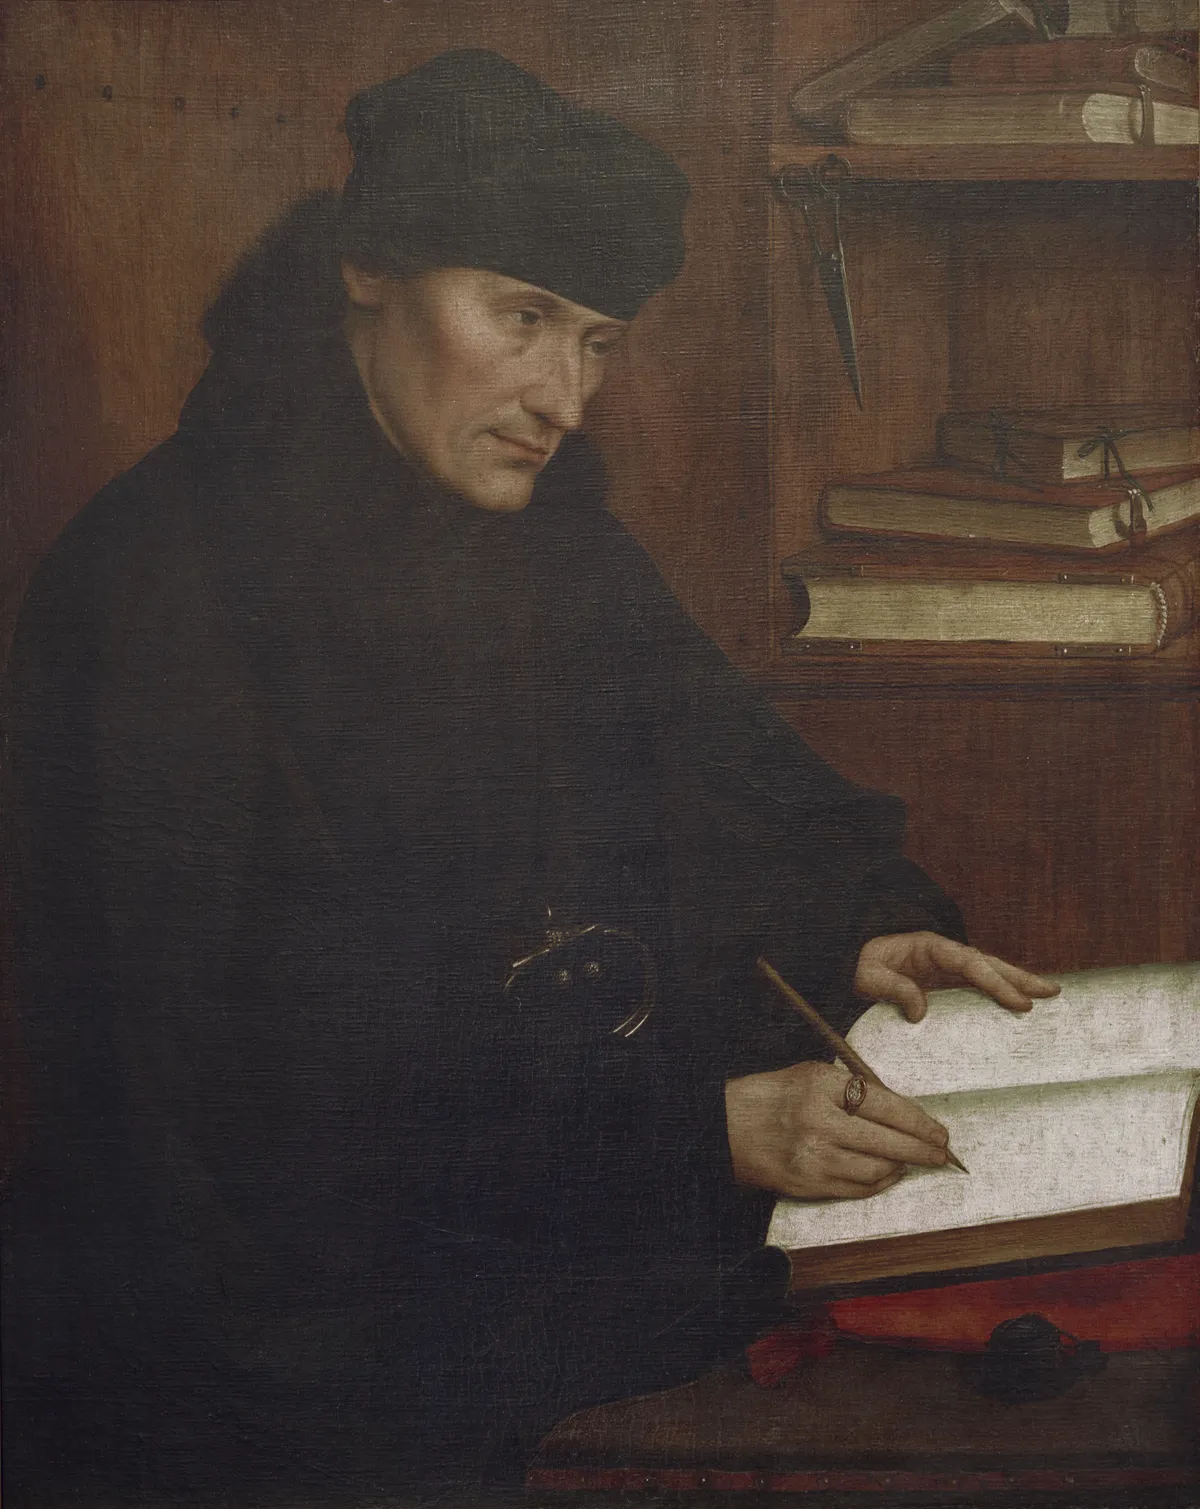 Quentin Matsyse pilt Erasmusest aastal 1517.